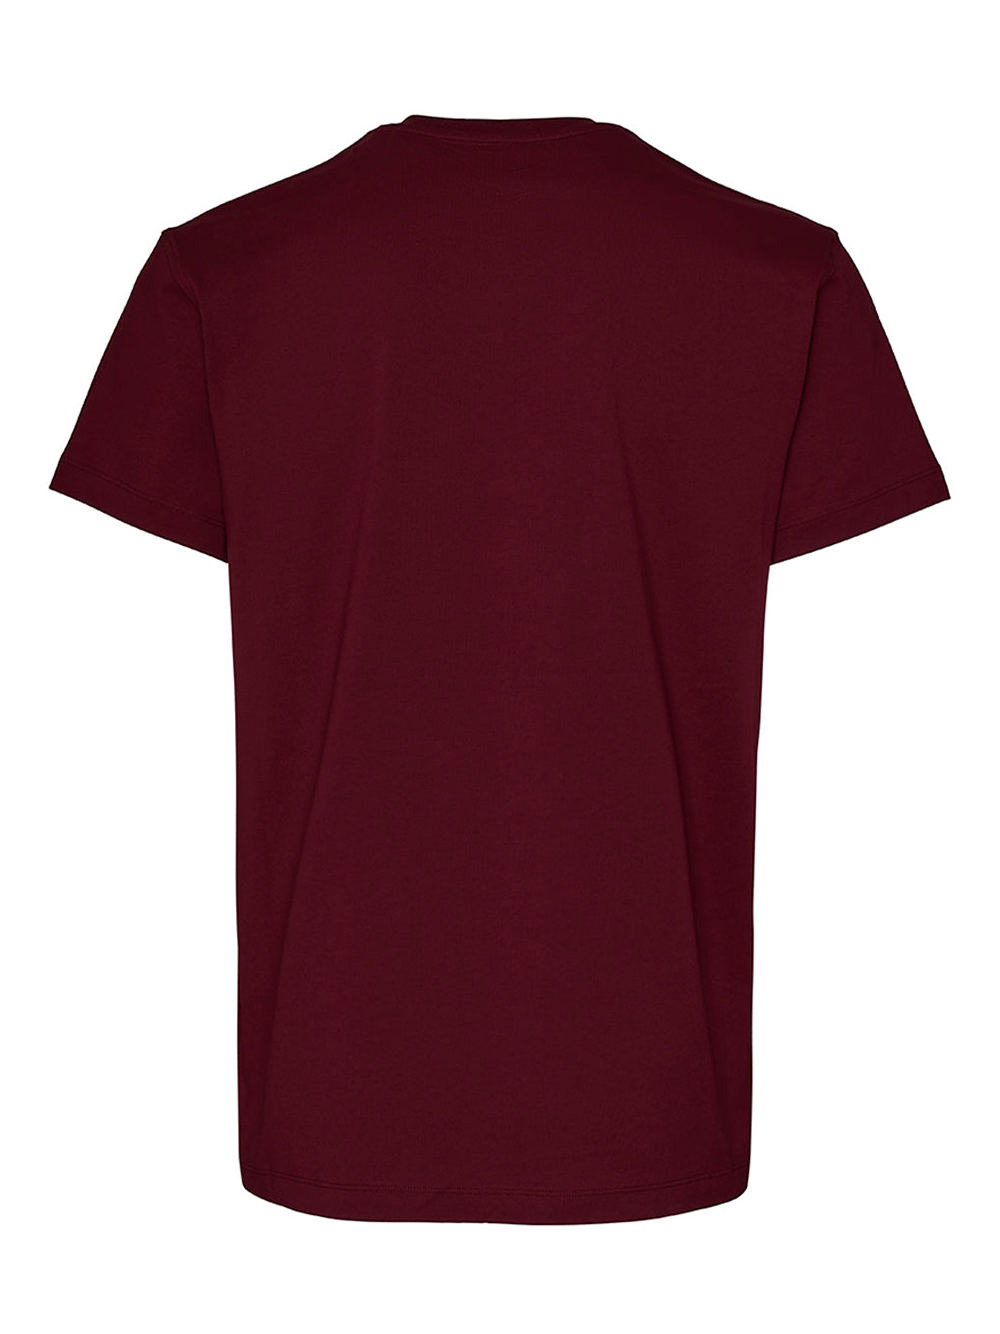 BLACKJACK-New-Human-Unisex-T-Shirt-Burgundy-2